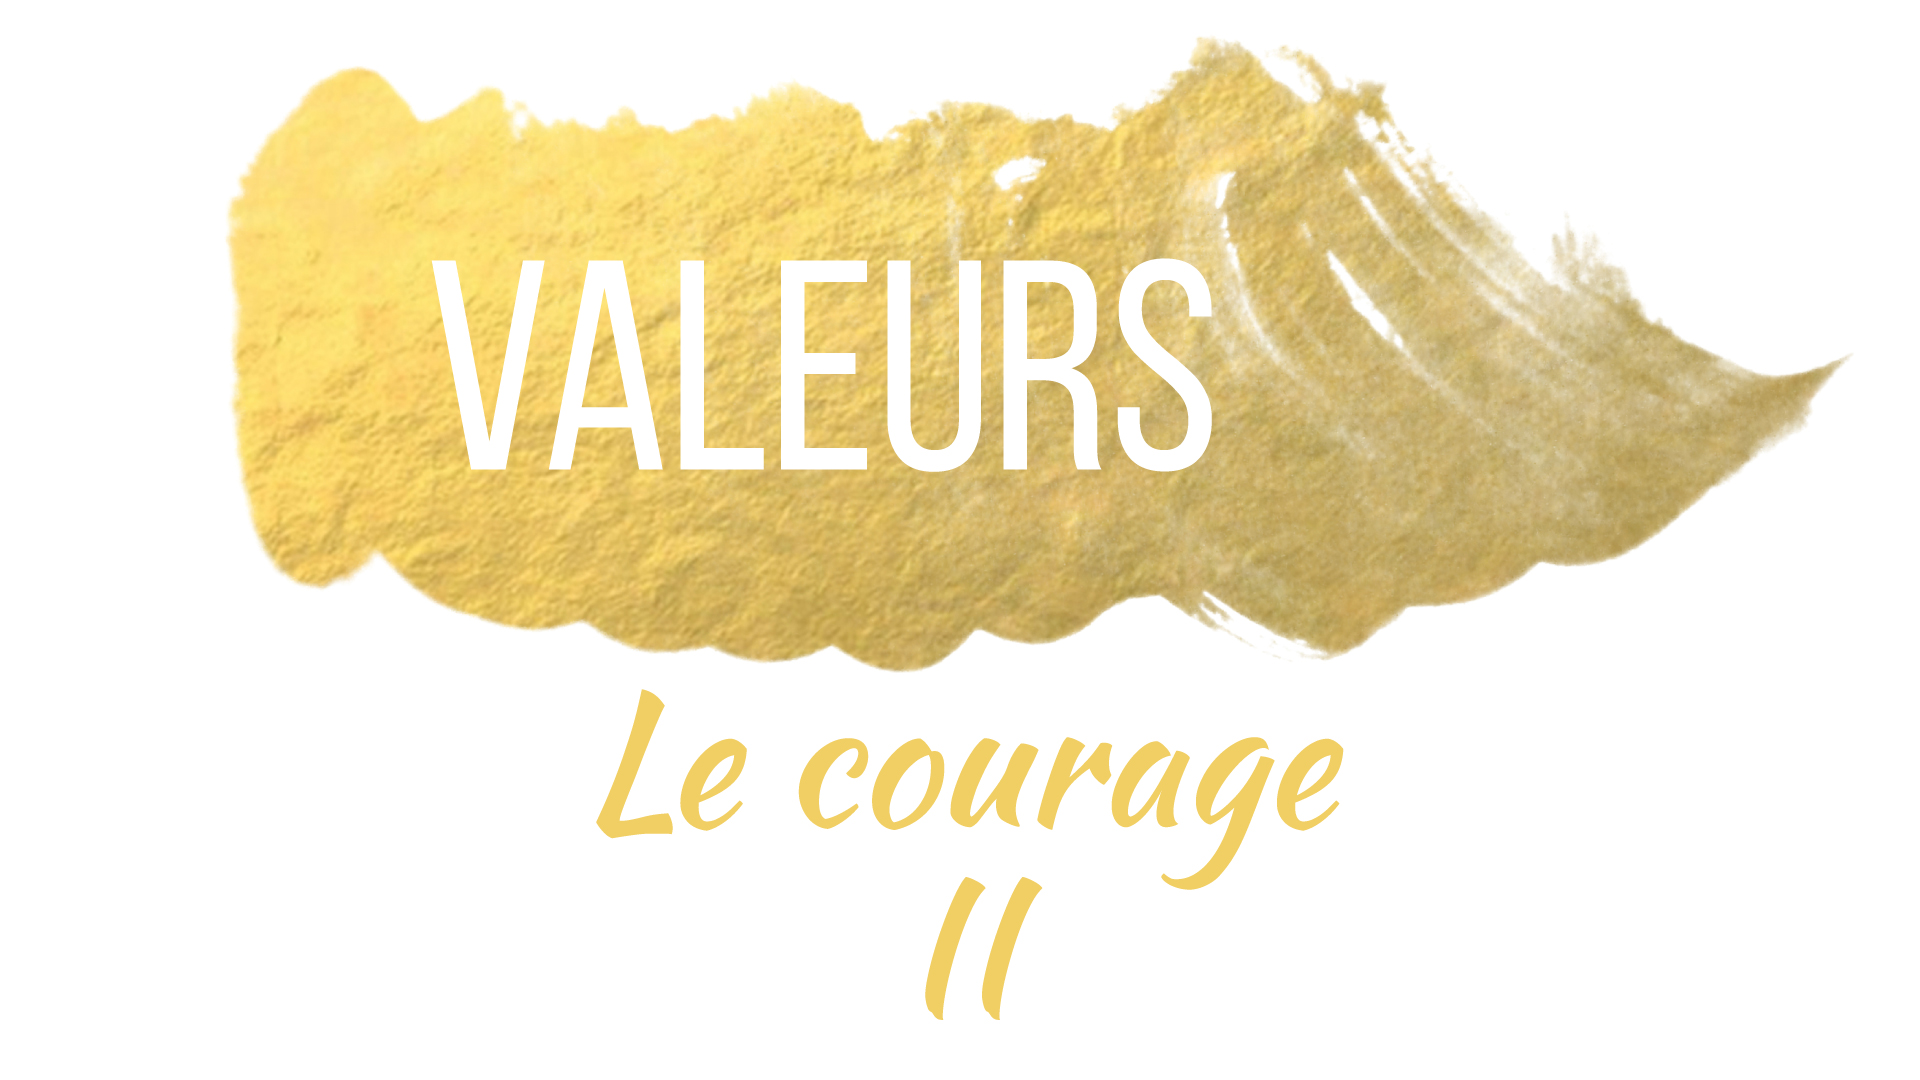 Valeurs - Le courage II